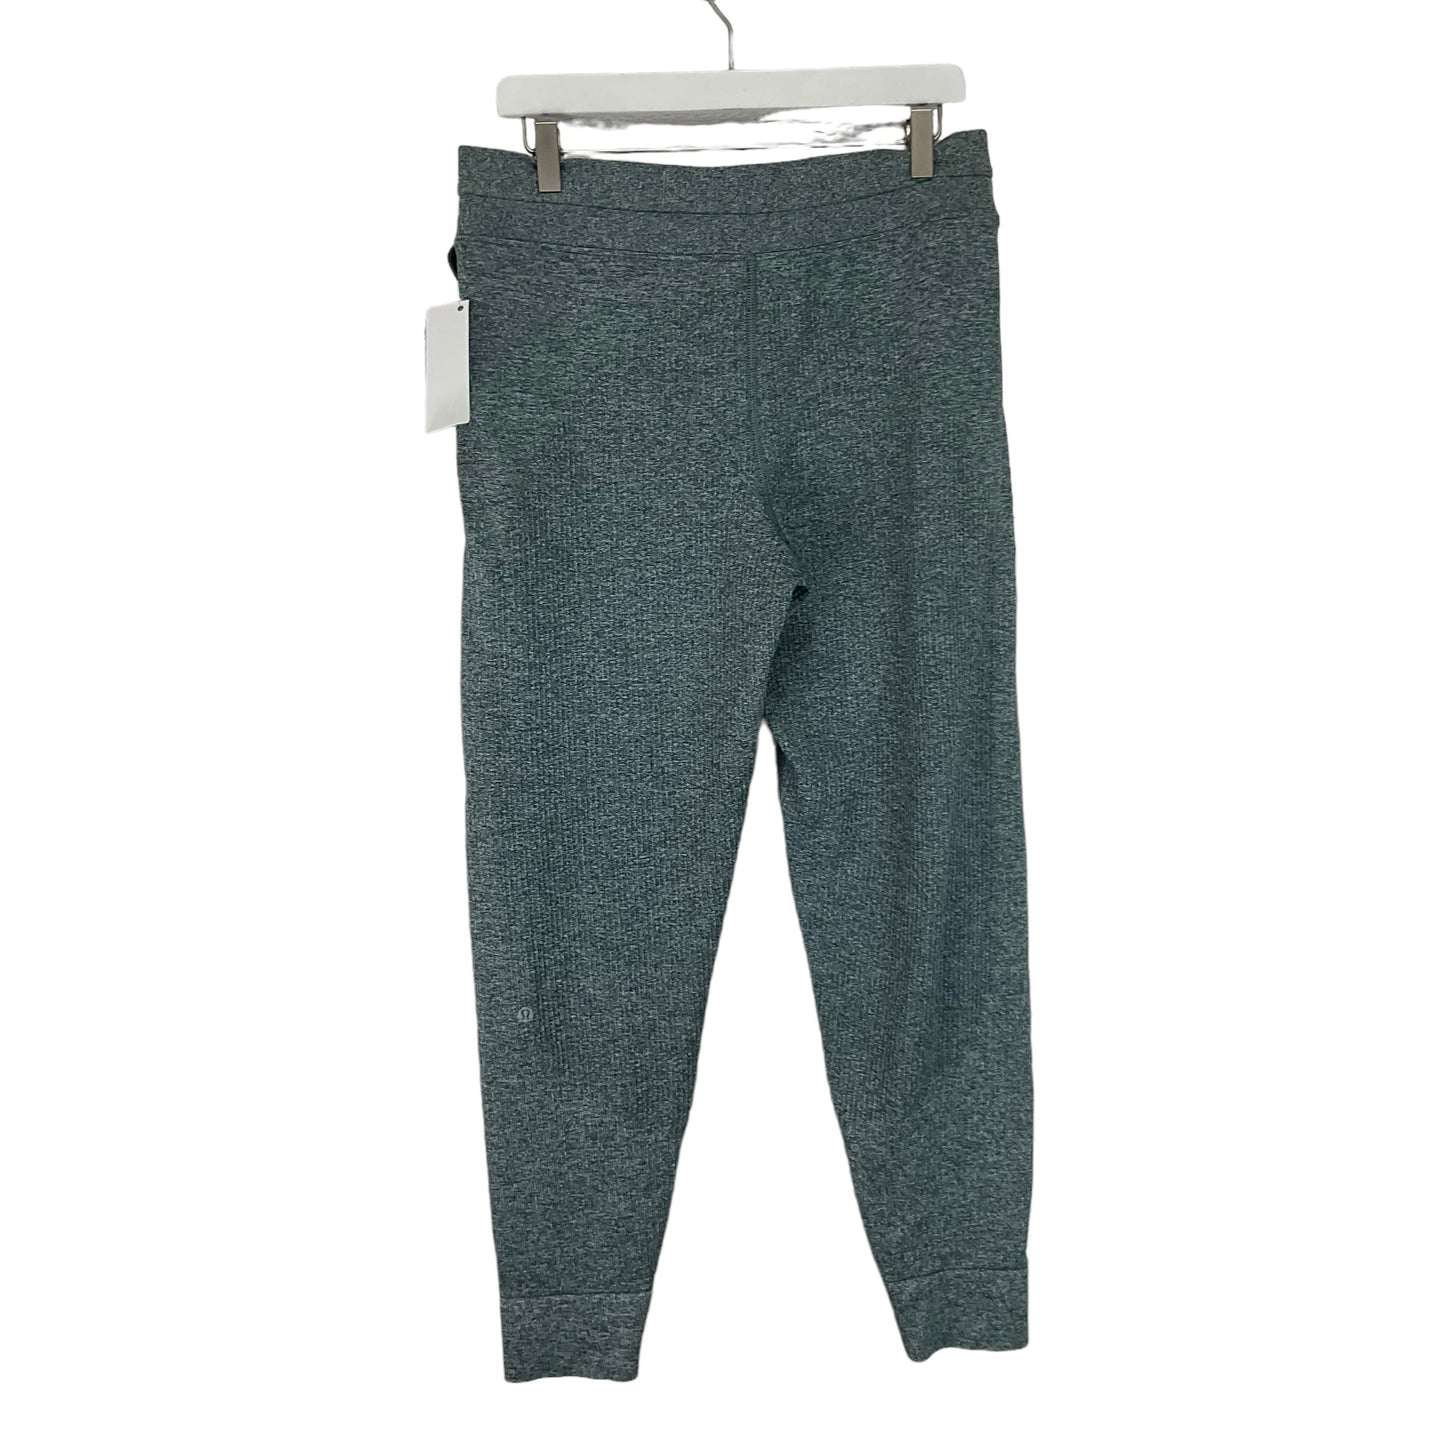 Green Athletic Pants Lululemon, Size 10